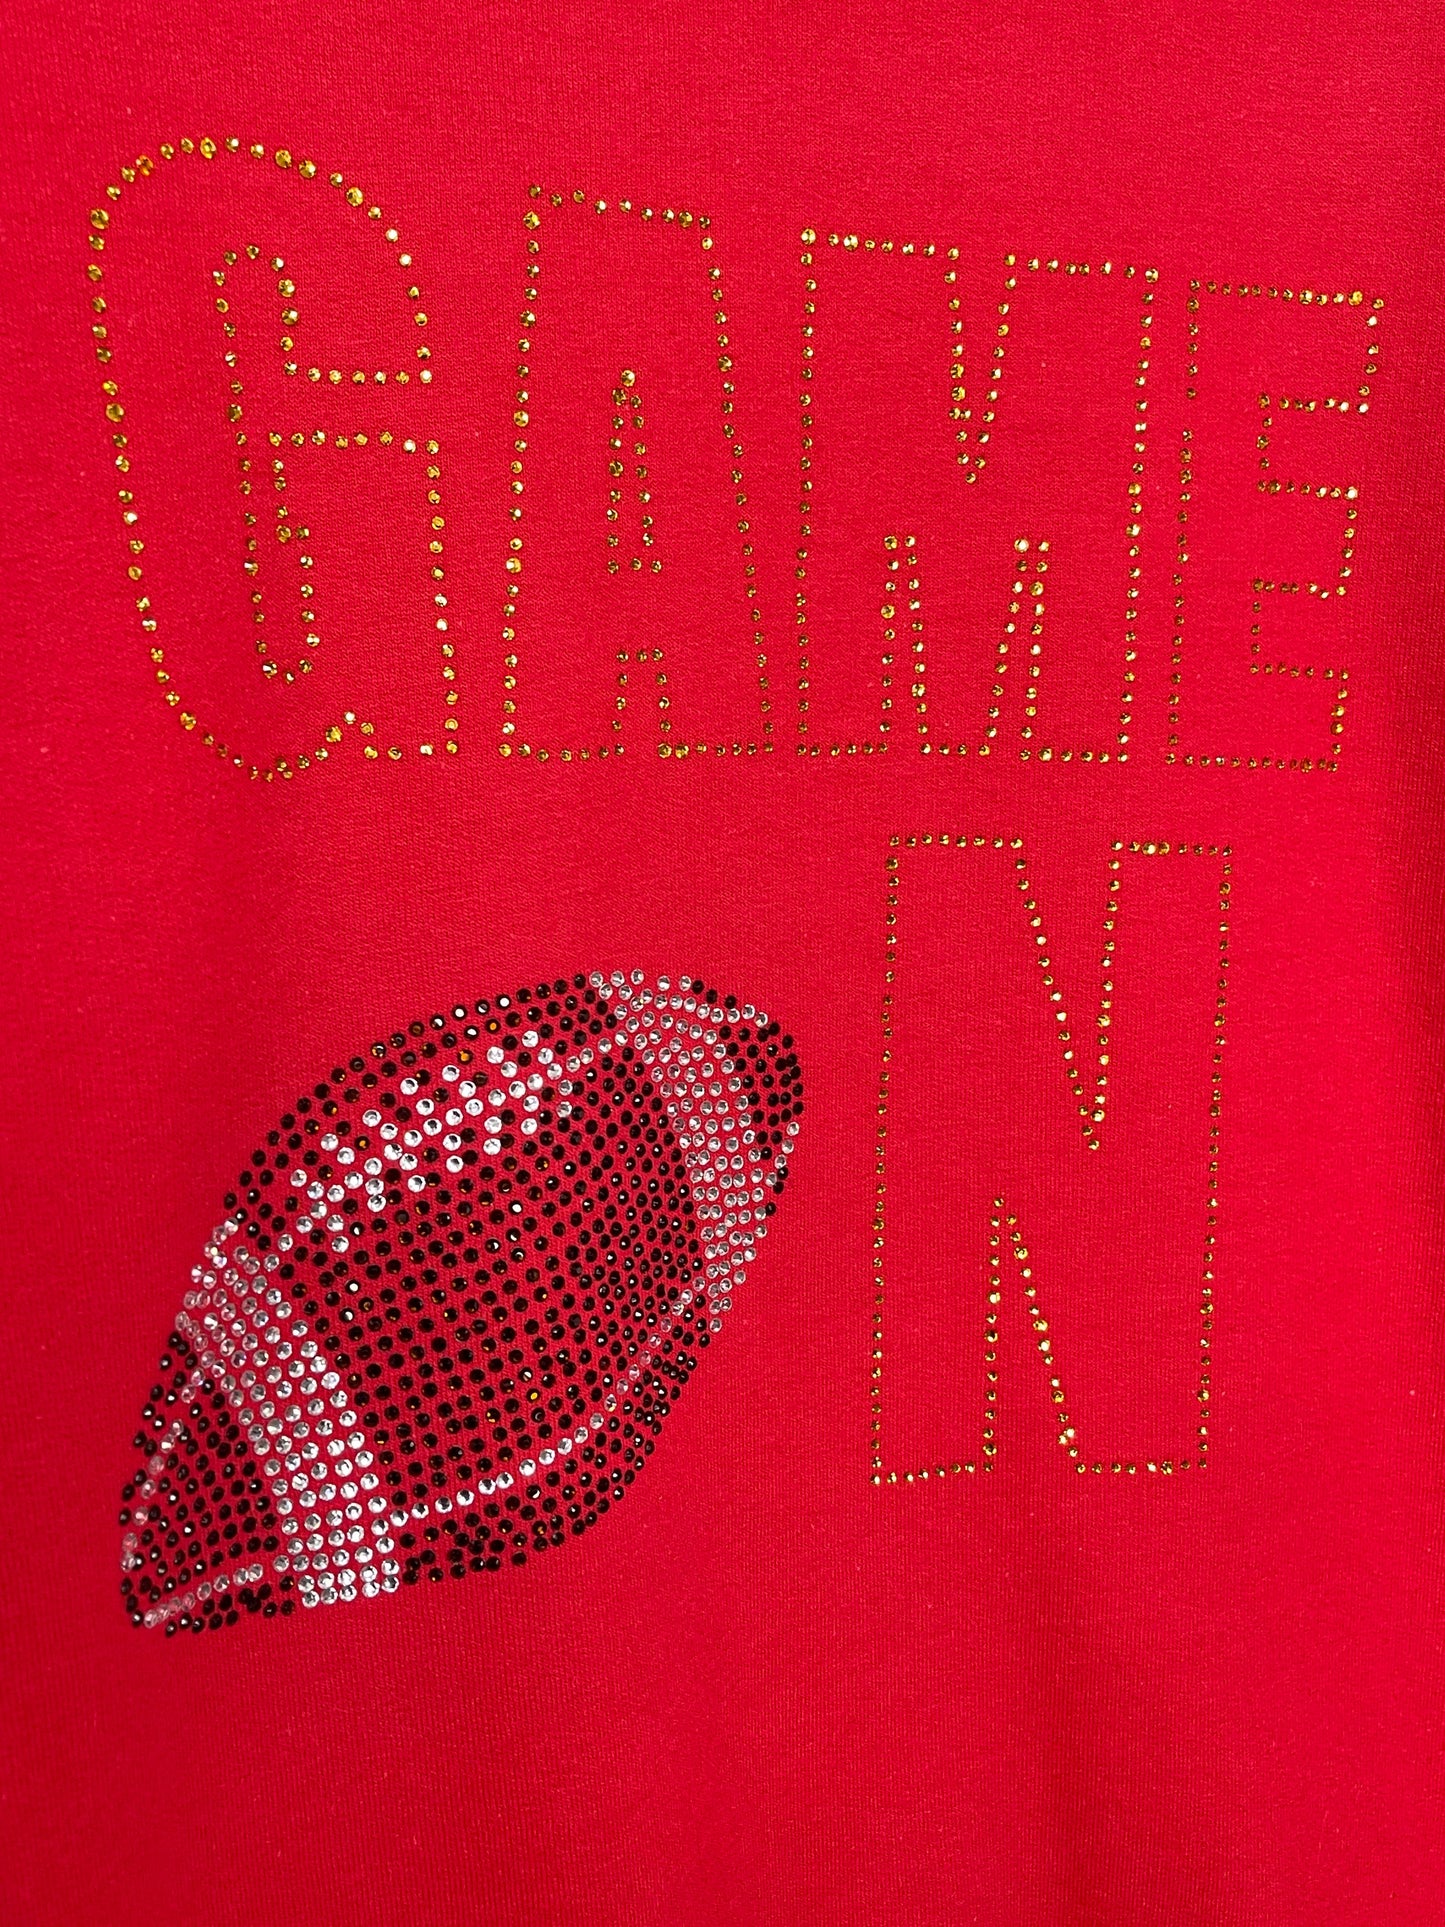 Game Day Sweatshirt, Crewneck Red, Crystal Game On Football